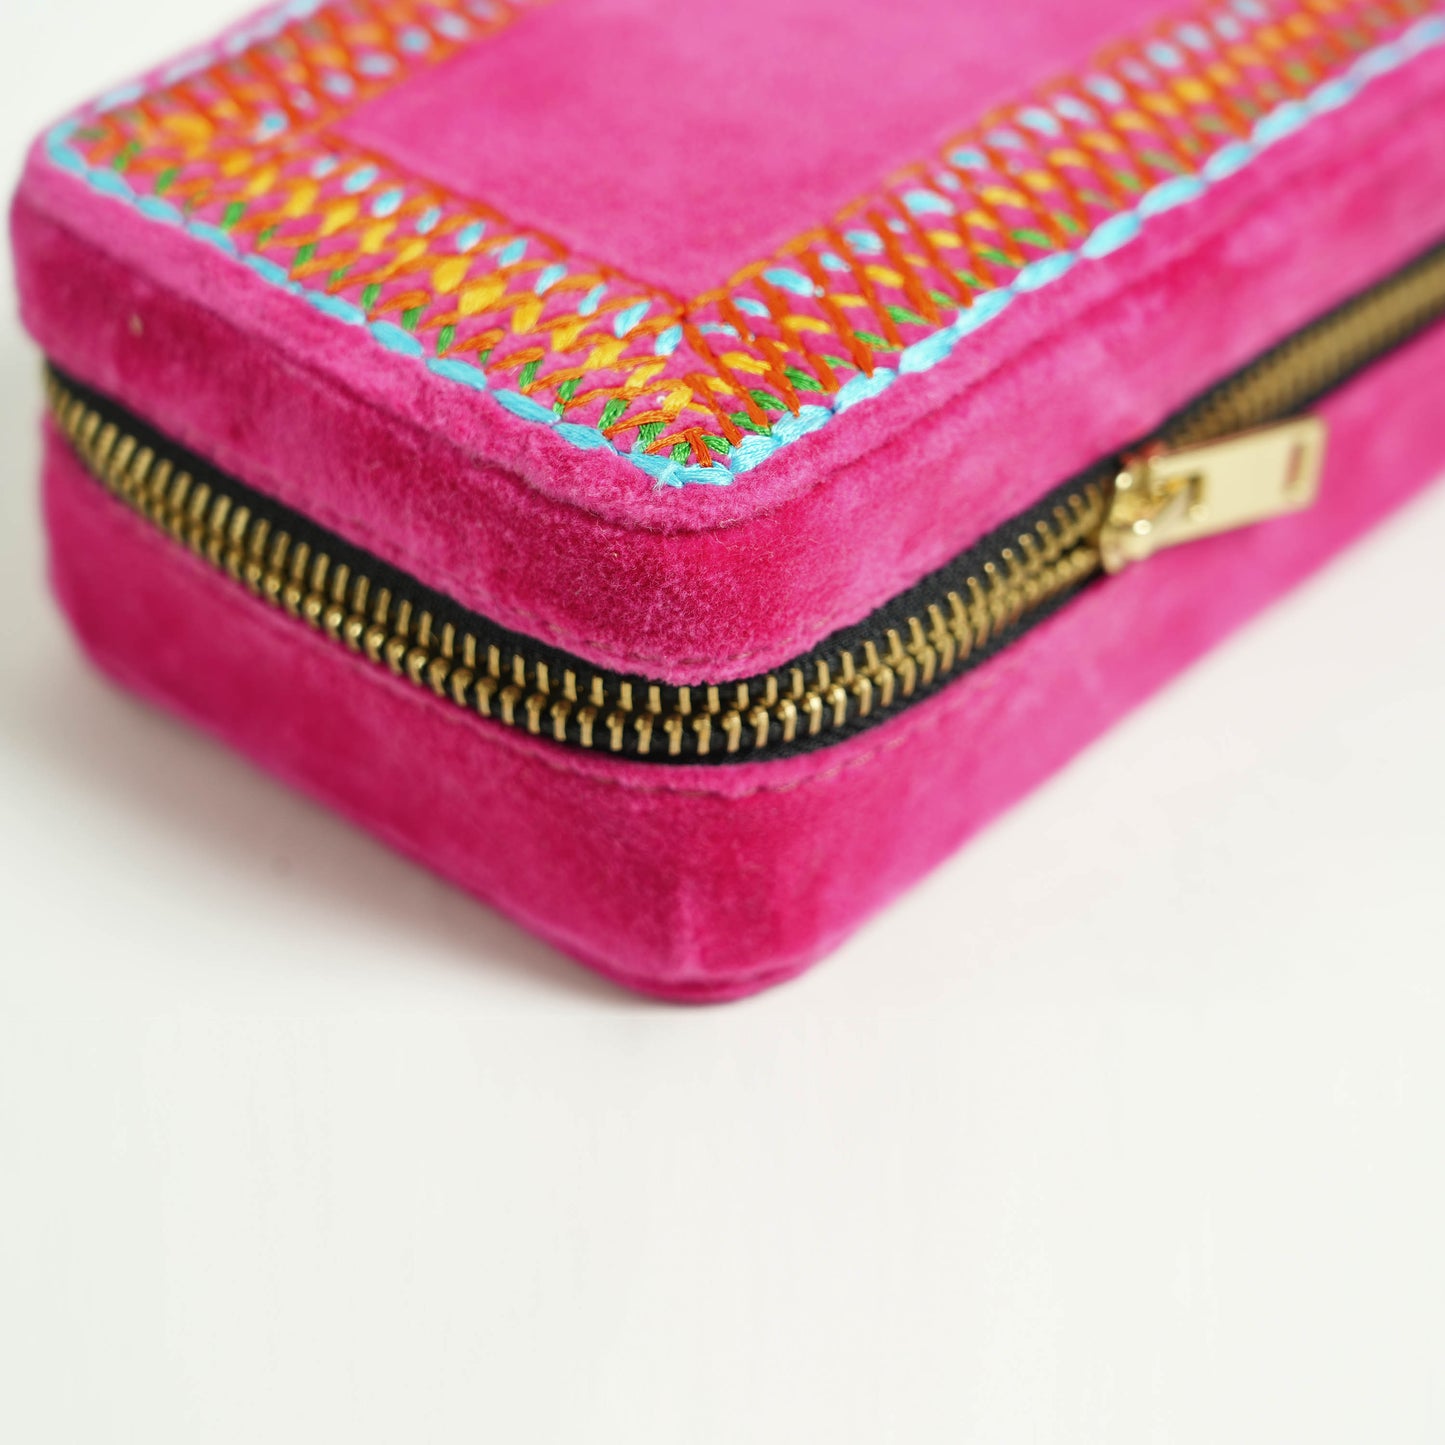 Hot pink Rectangular Embroidered Jewellery box